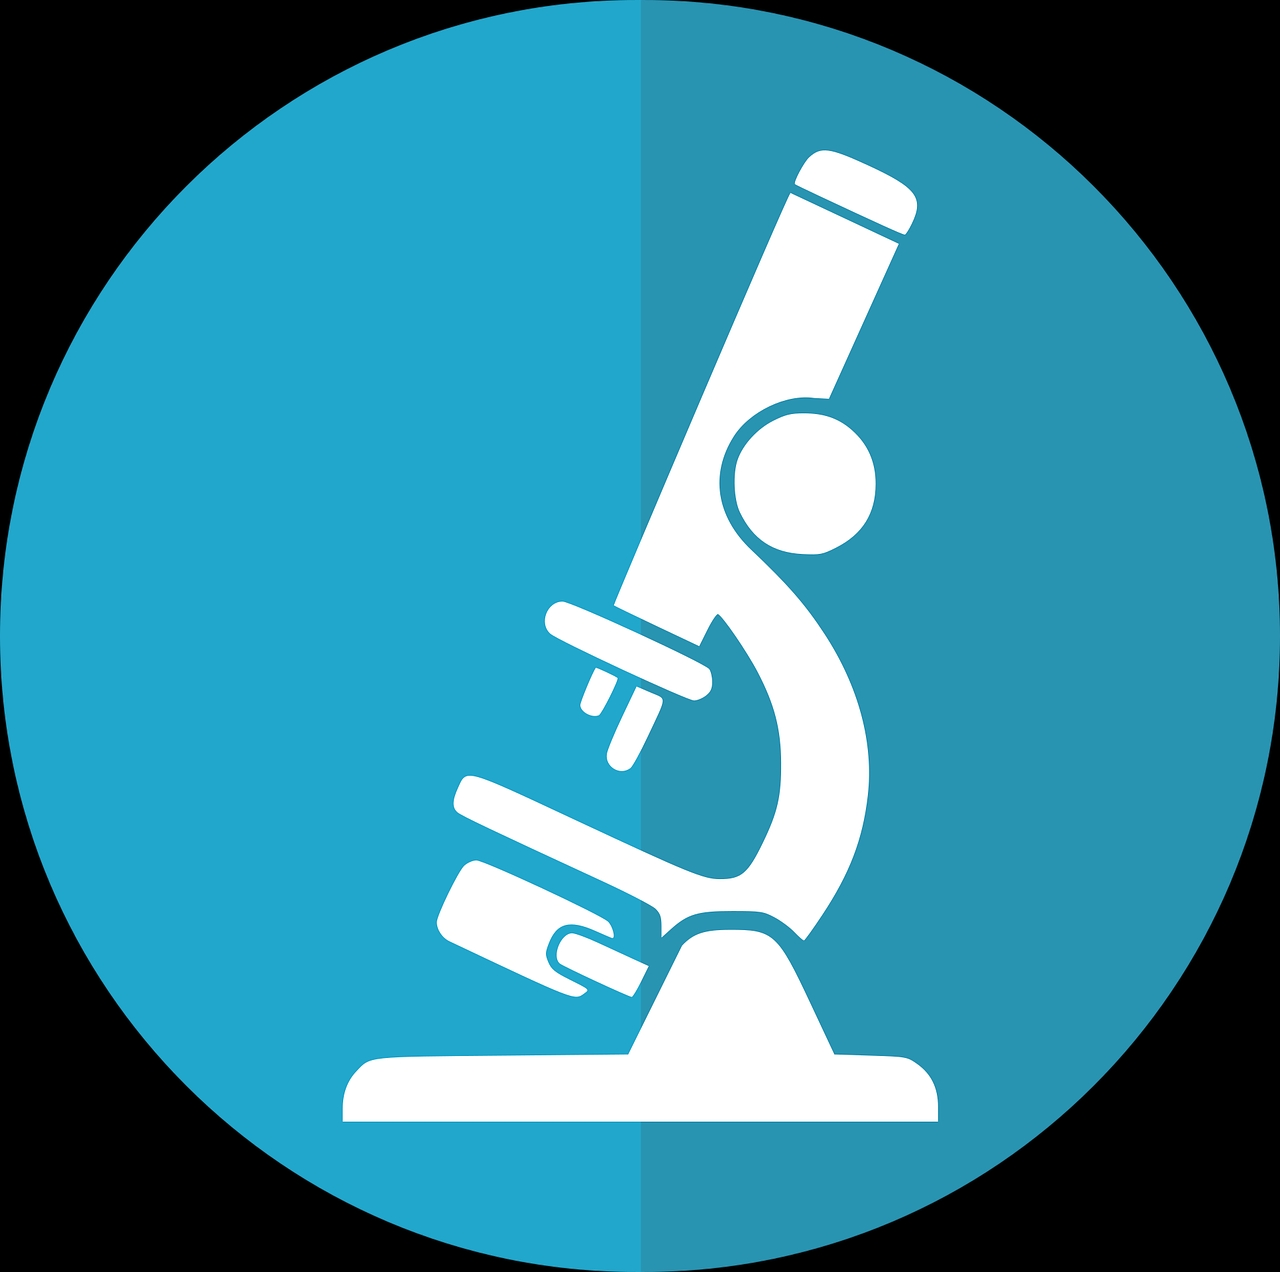 microscope for website logo 1280pix pixabay